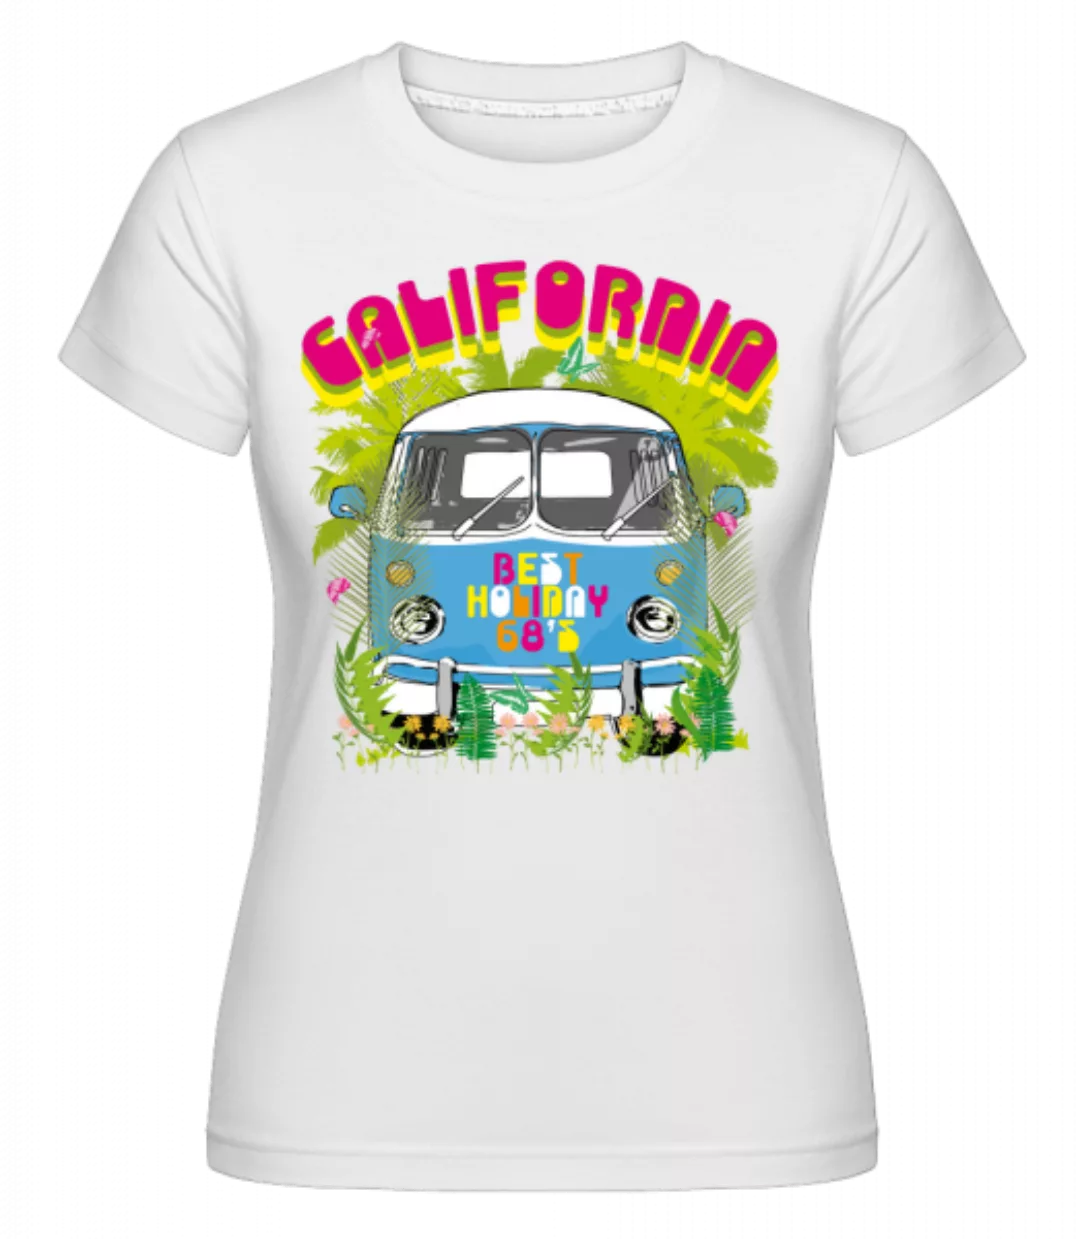 California Bus · Shirtinator Frauen T-Shirt günstig online kaufen